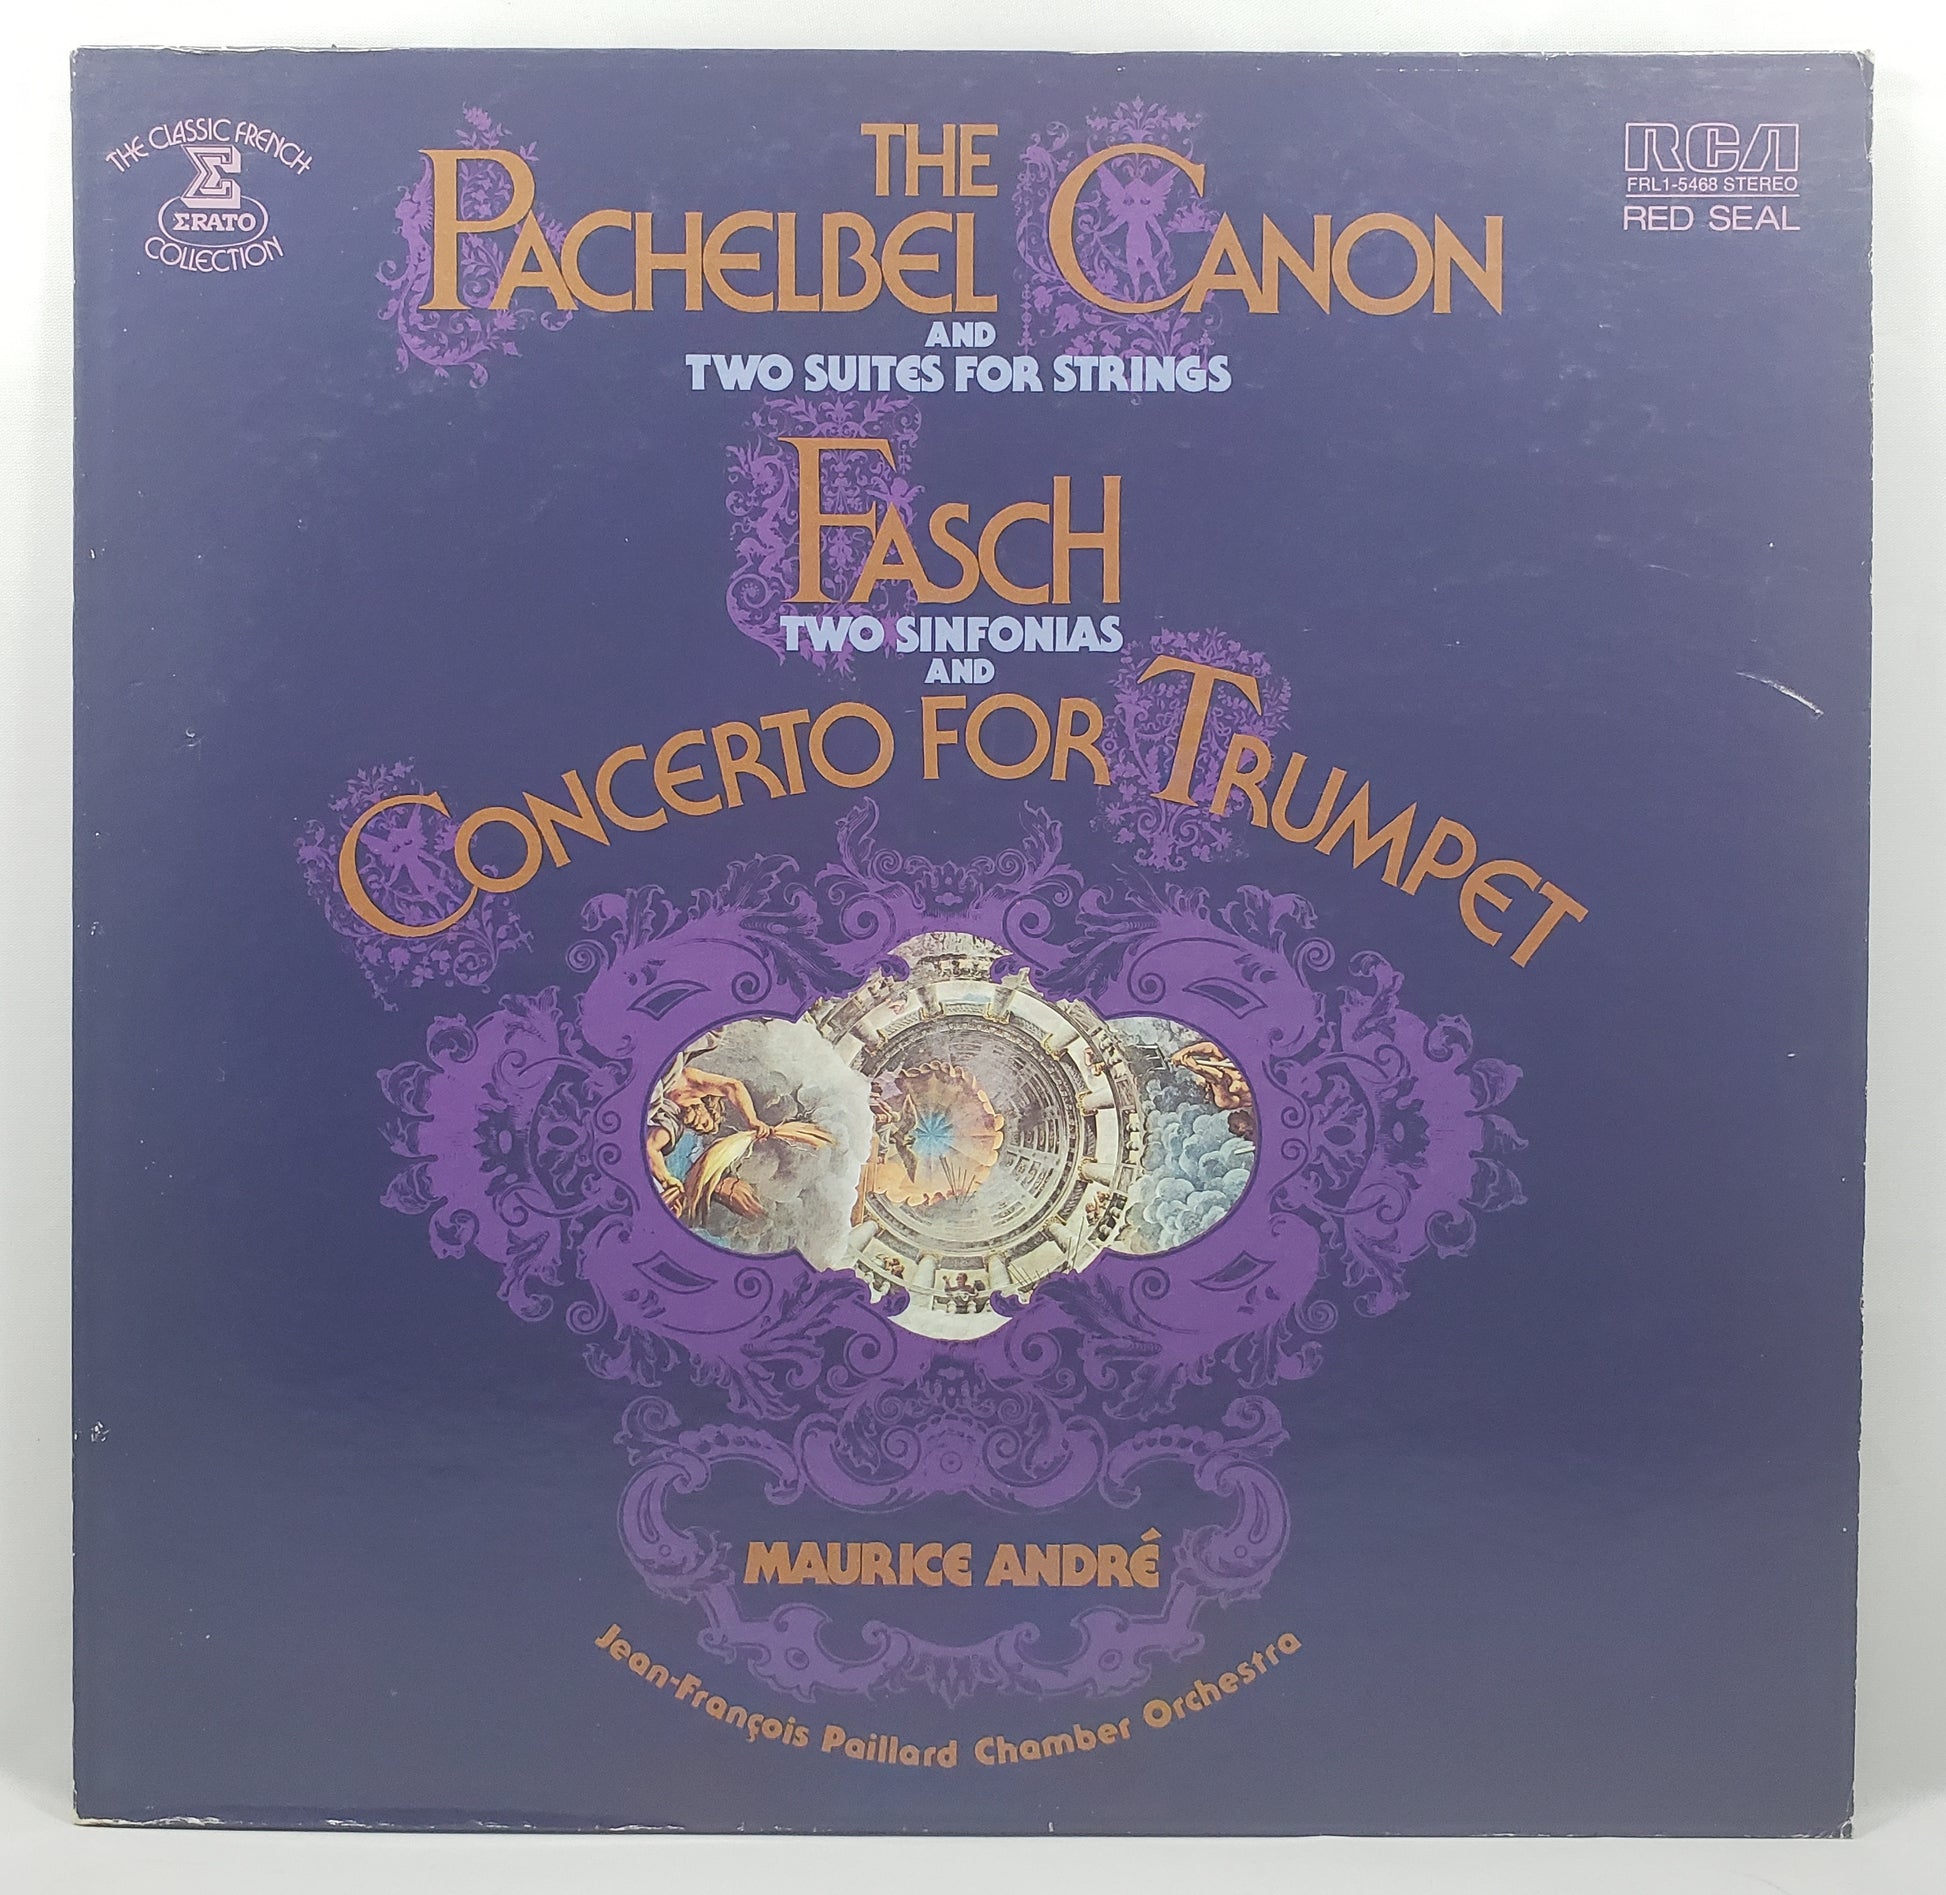 Jean-Francois Paillard - Pachelbel, Fasch [1977 Reissue] [Used Vinyl Record LP]